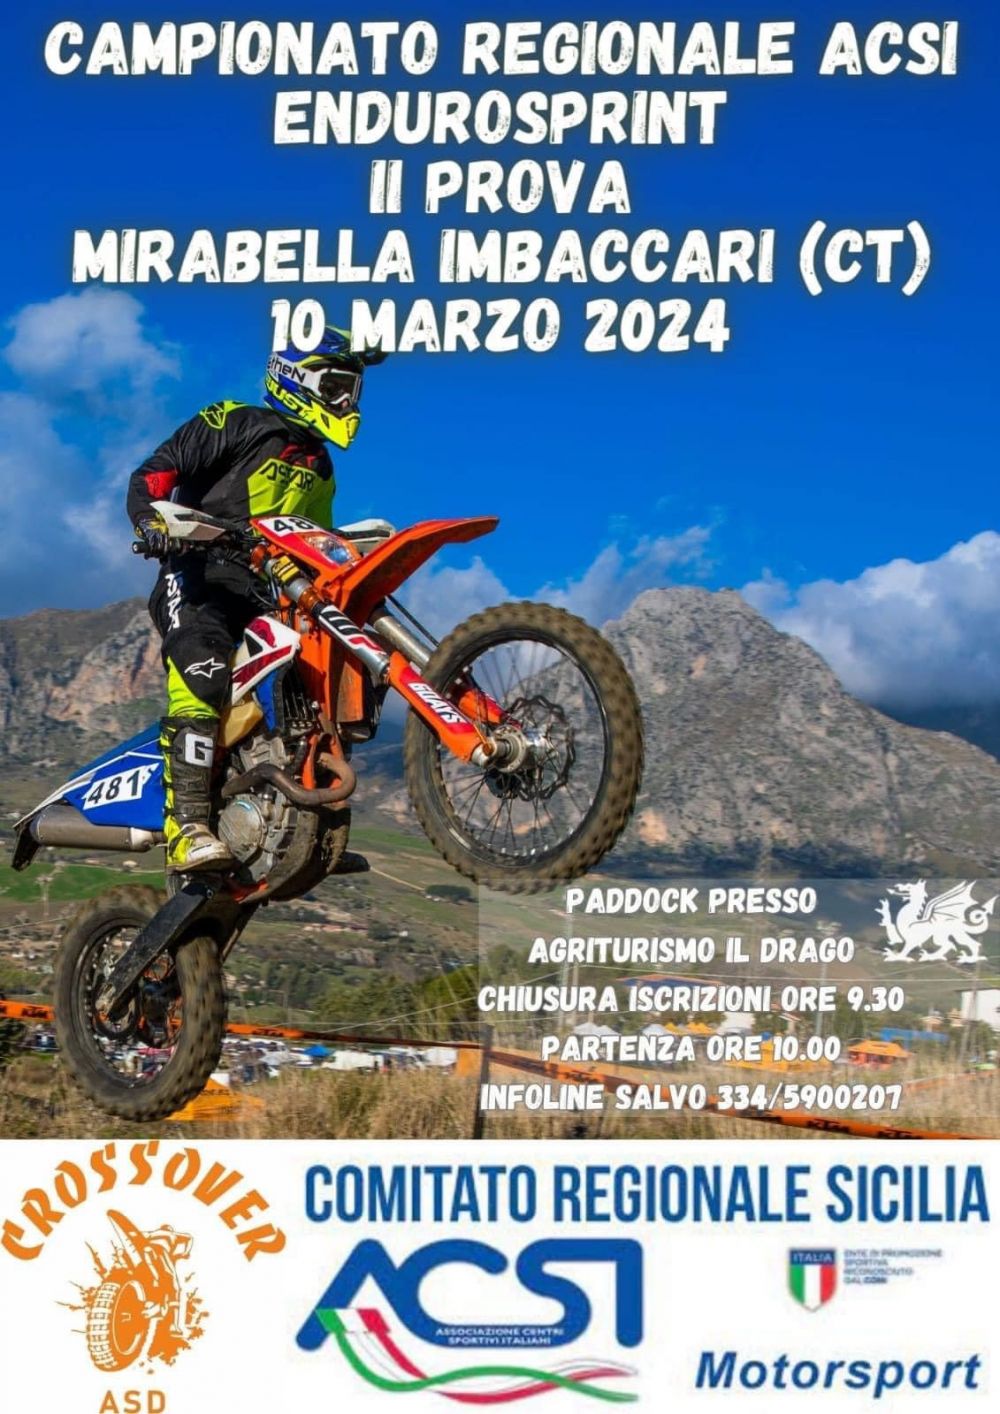  10marzo 2024 Mirabella Imbaccari (ct)